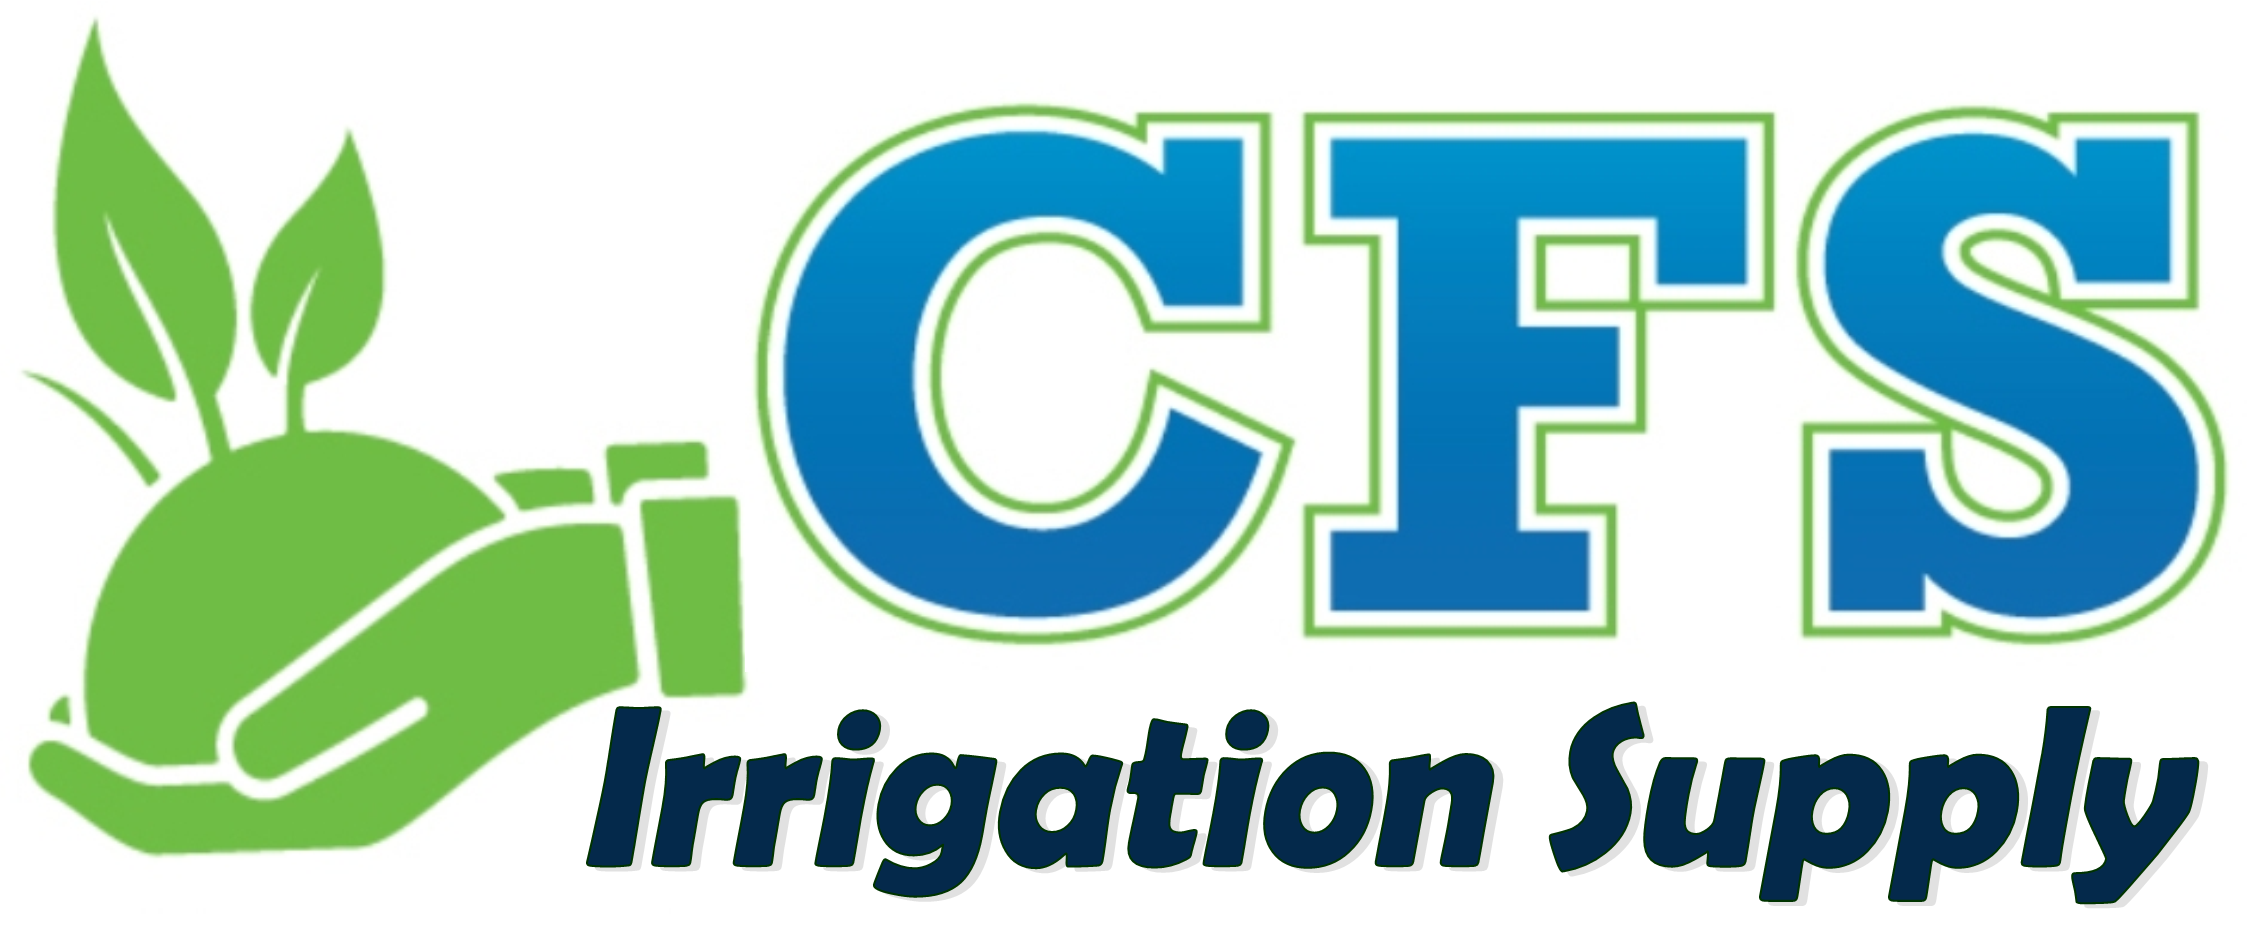 CFS irrigation logo use (2).png